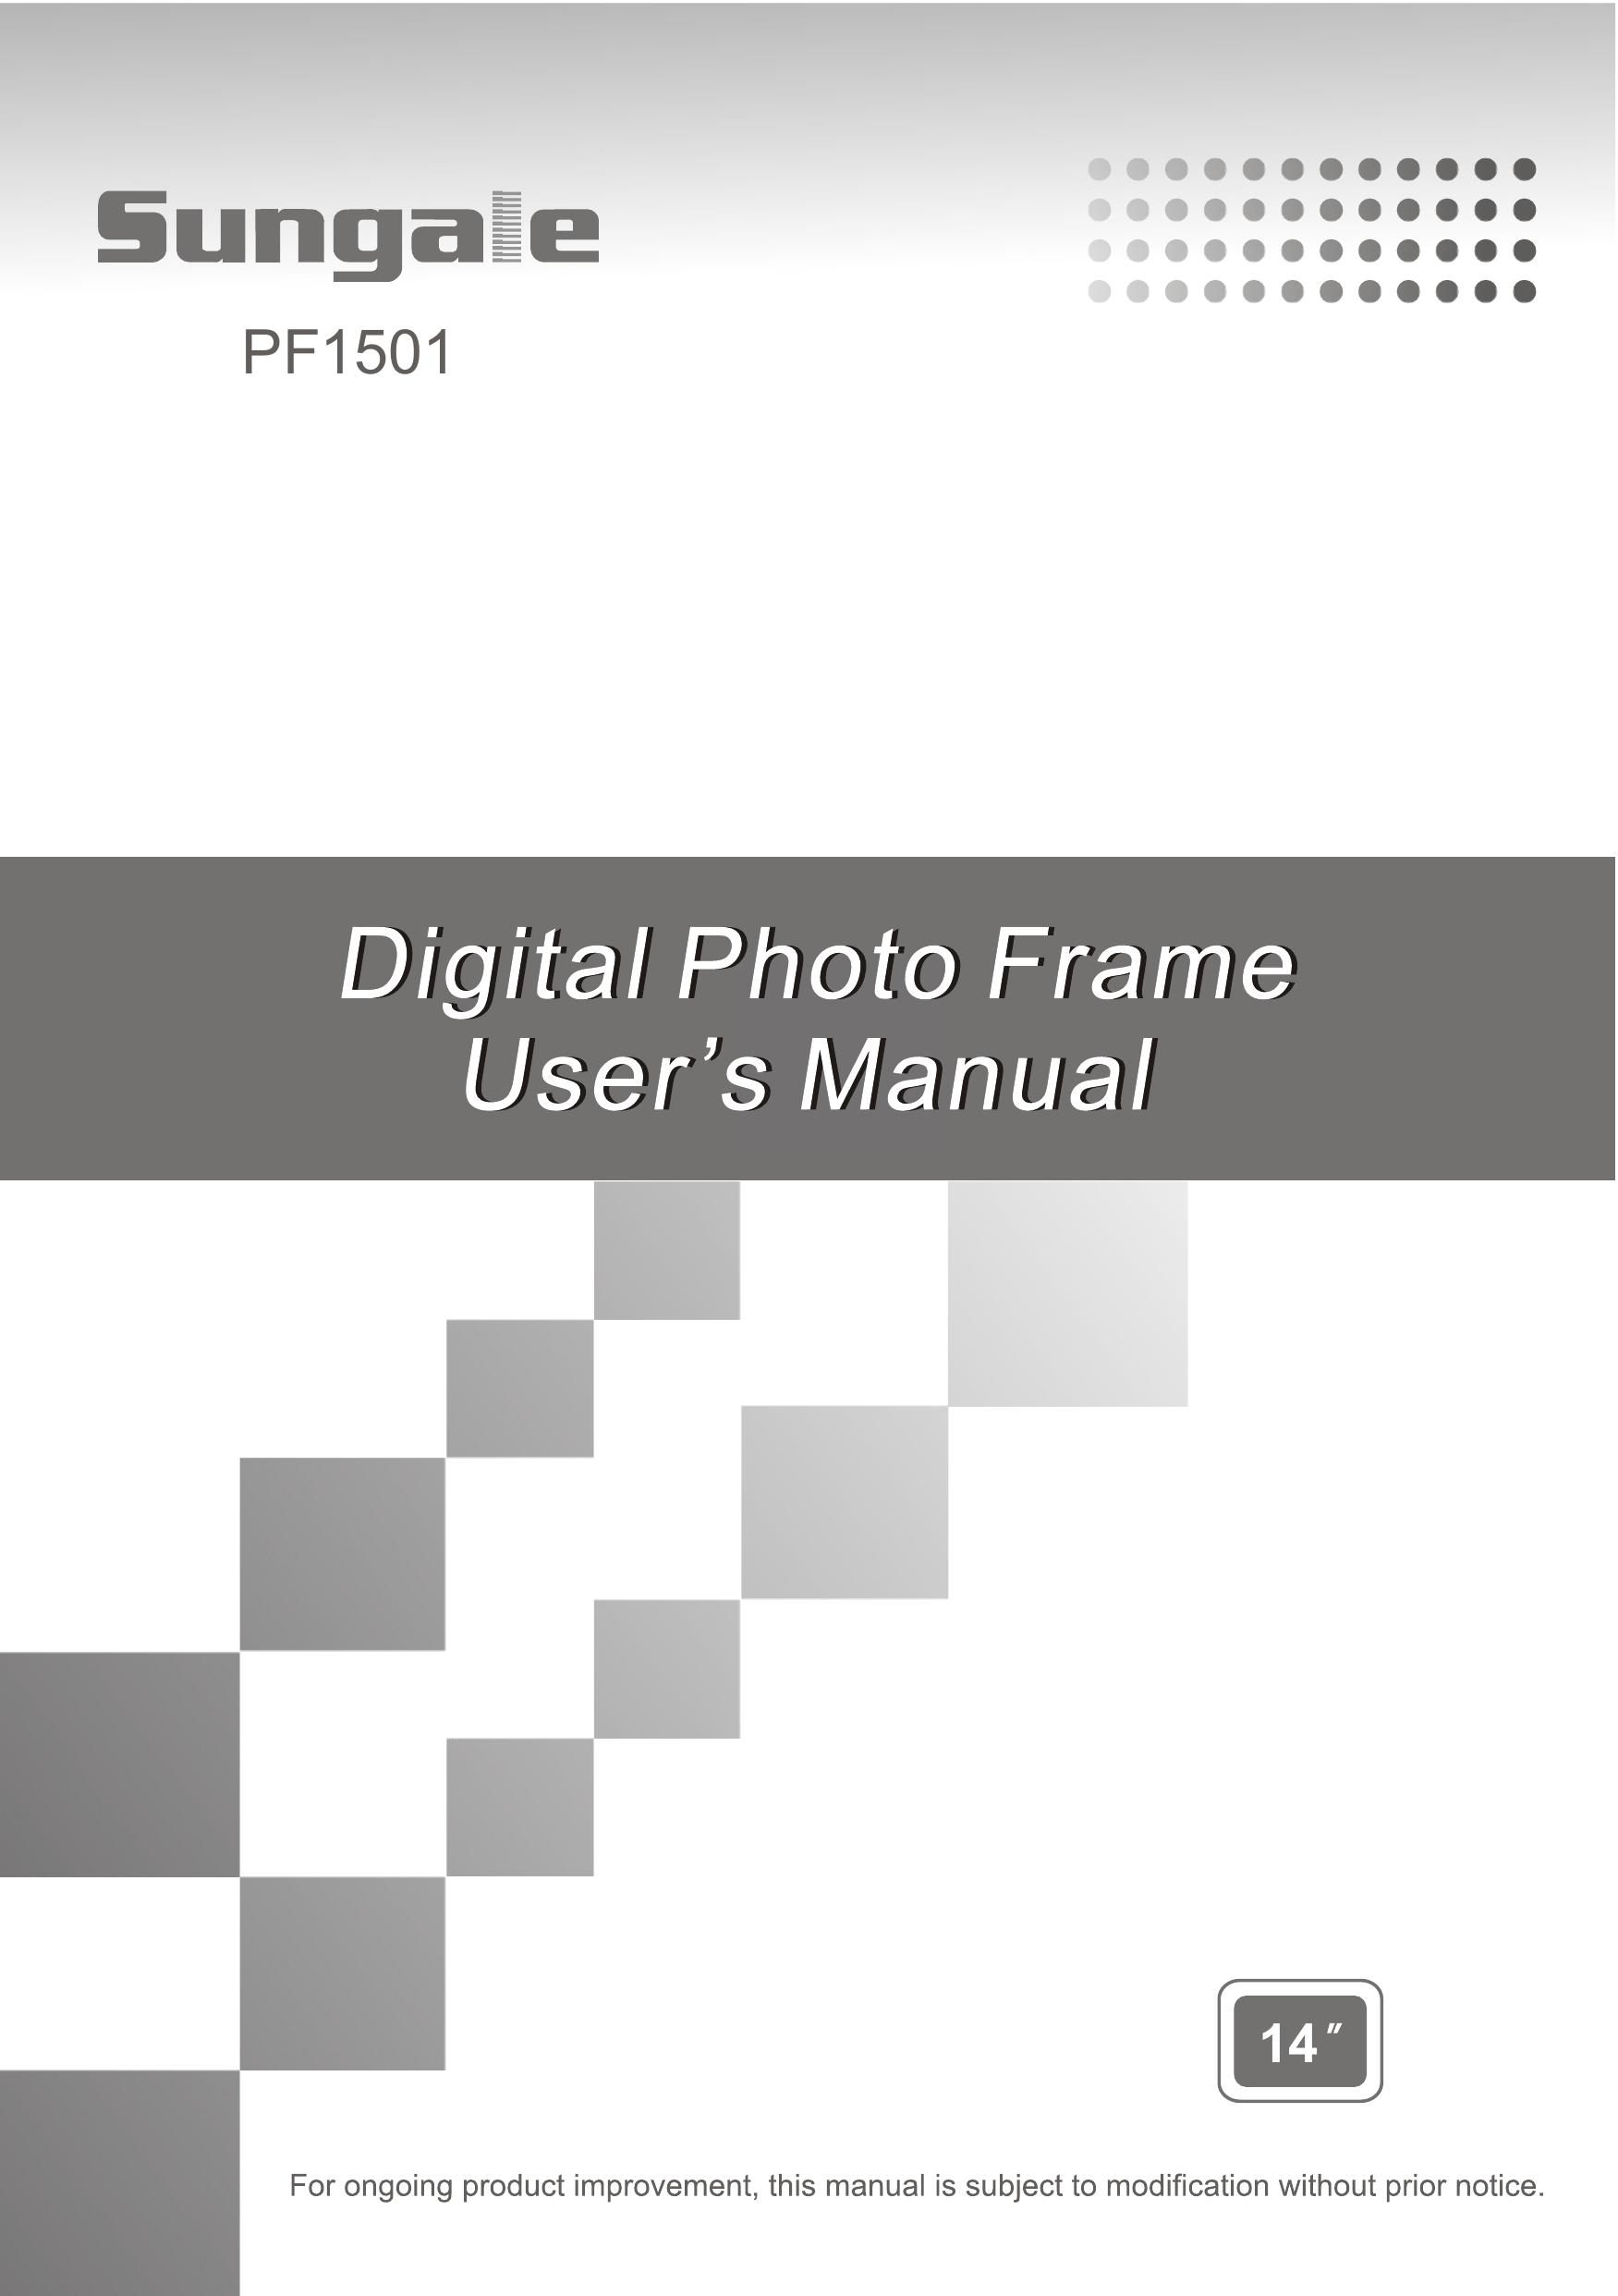 Sungale PF1501 Digital Photo Frame User Manual